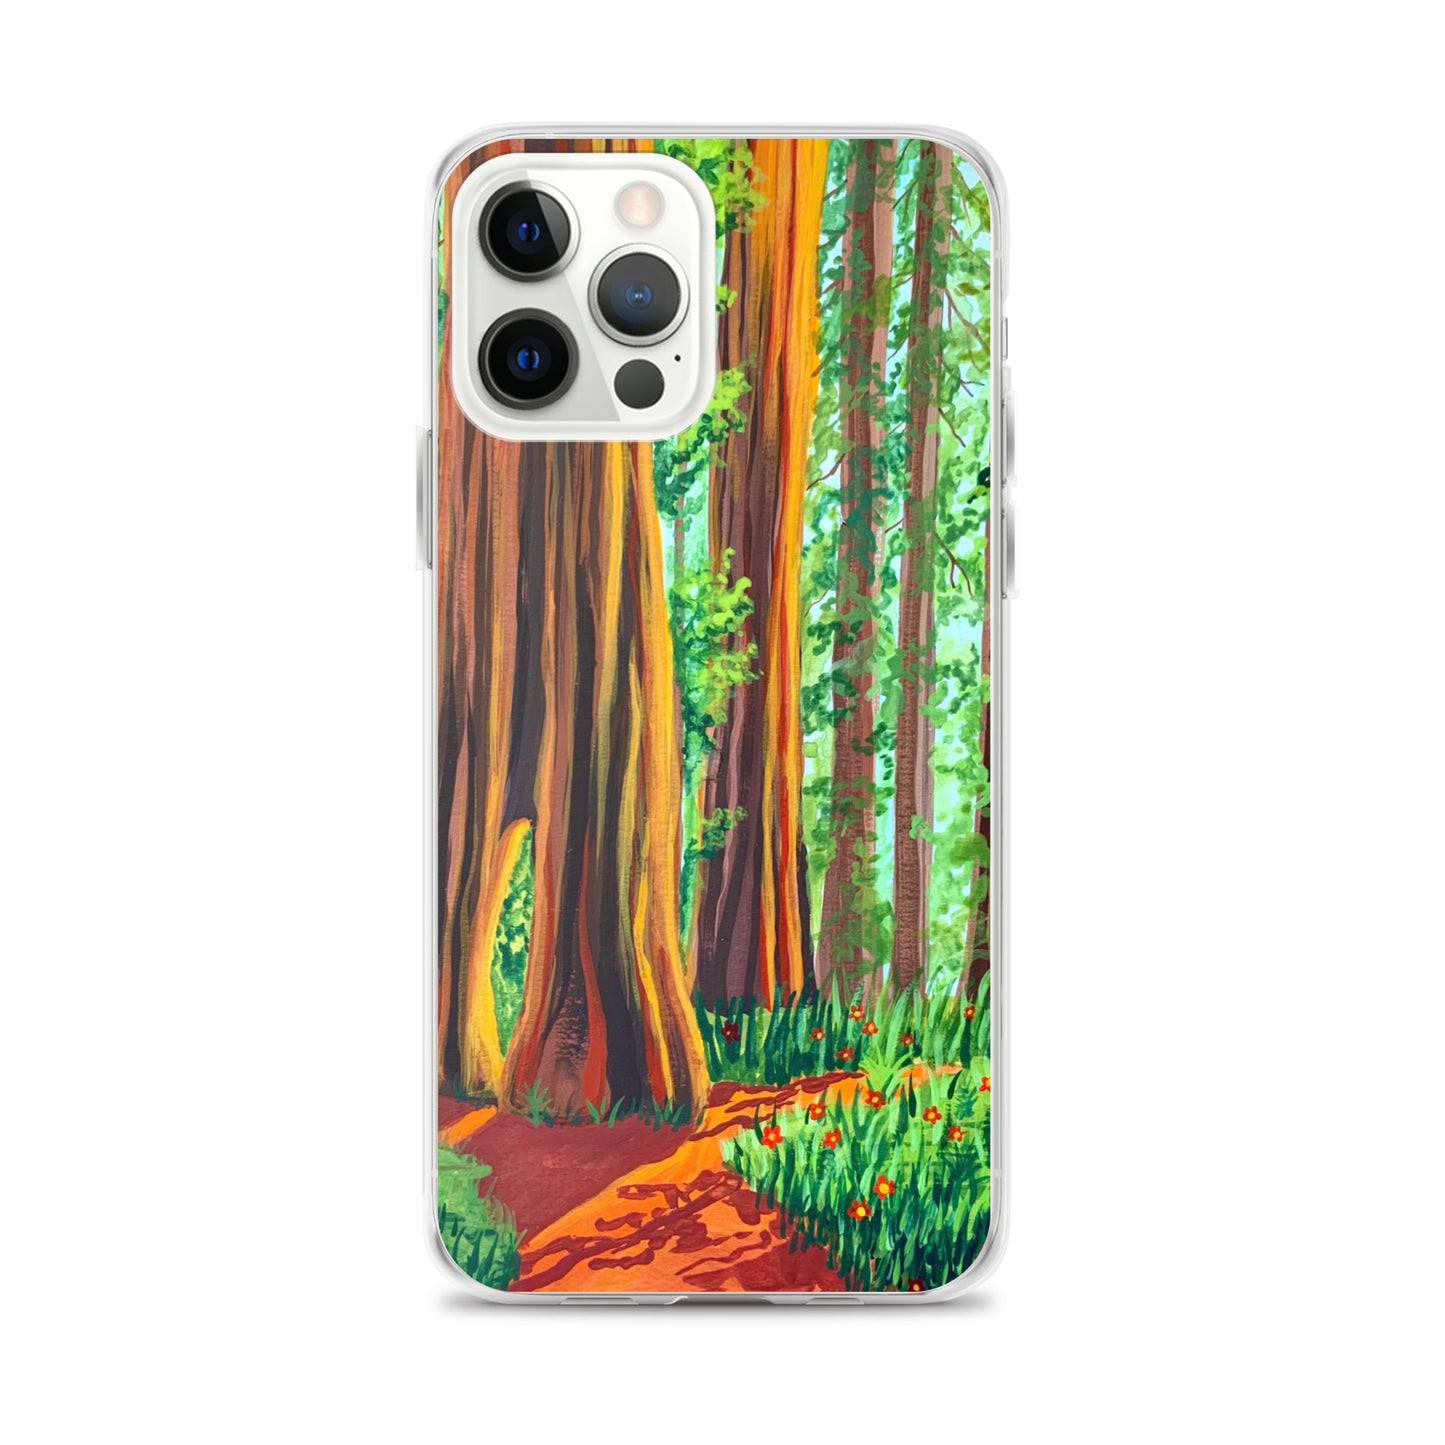 Sequoia National Park iPhone Case